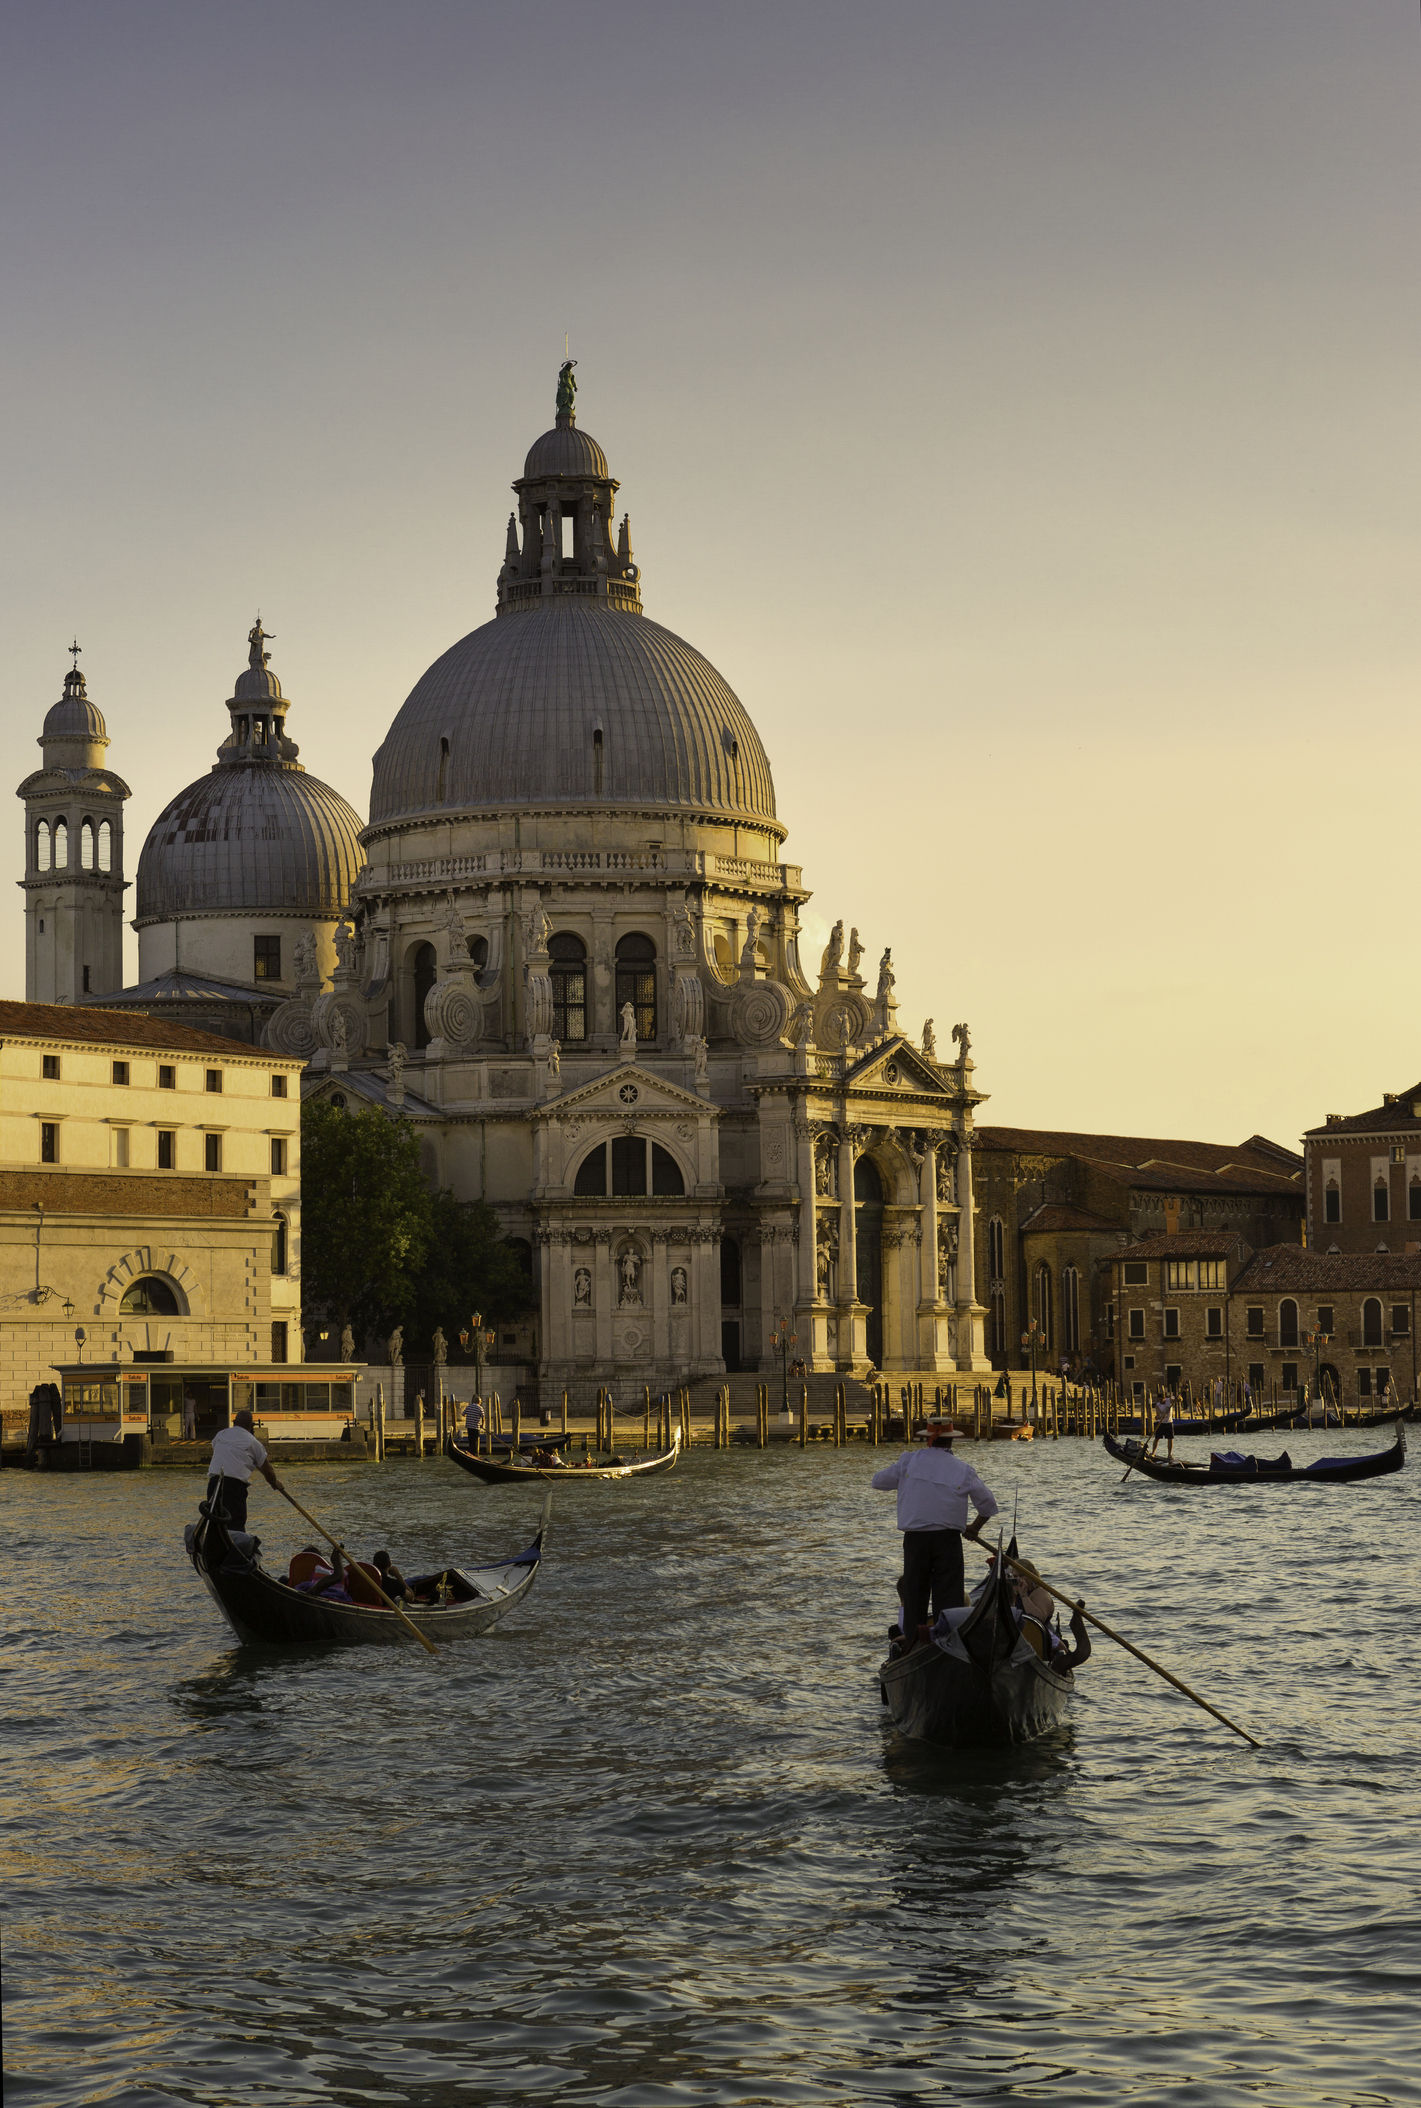 Two gondolas with gondoliers in the foreground and Basilica di Santa Maria della Salute in the background